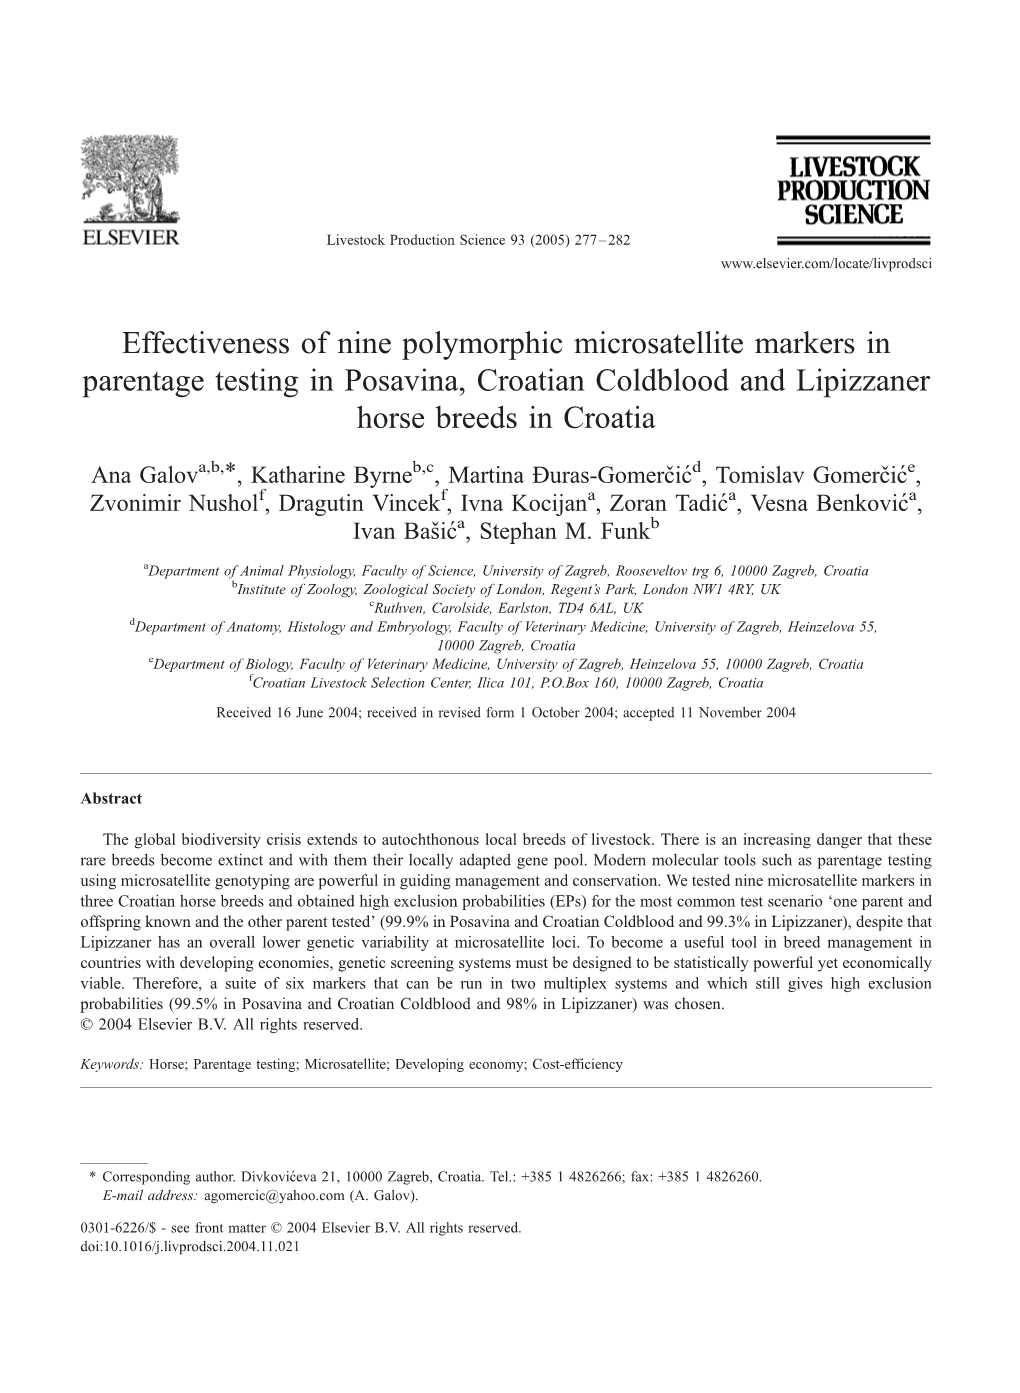 Effectiveness of Nine Polymorphic Microsatellite Markers in Parentage Testing in Posavina, Croatian Coldblood and Lipizzaner Horse Breeds in Croatia